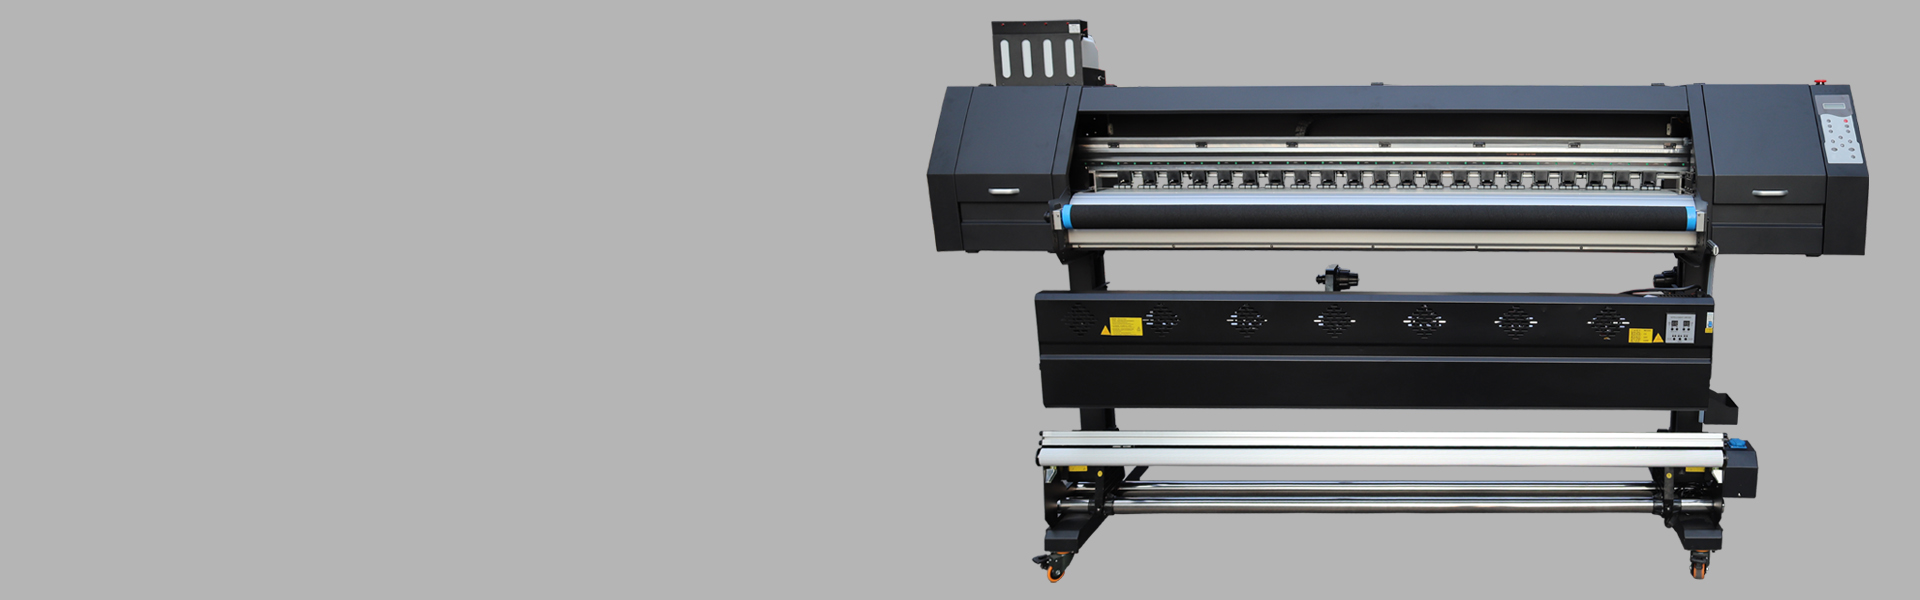 I3200 ECO printer